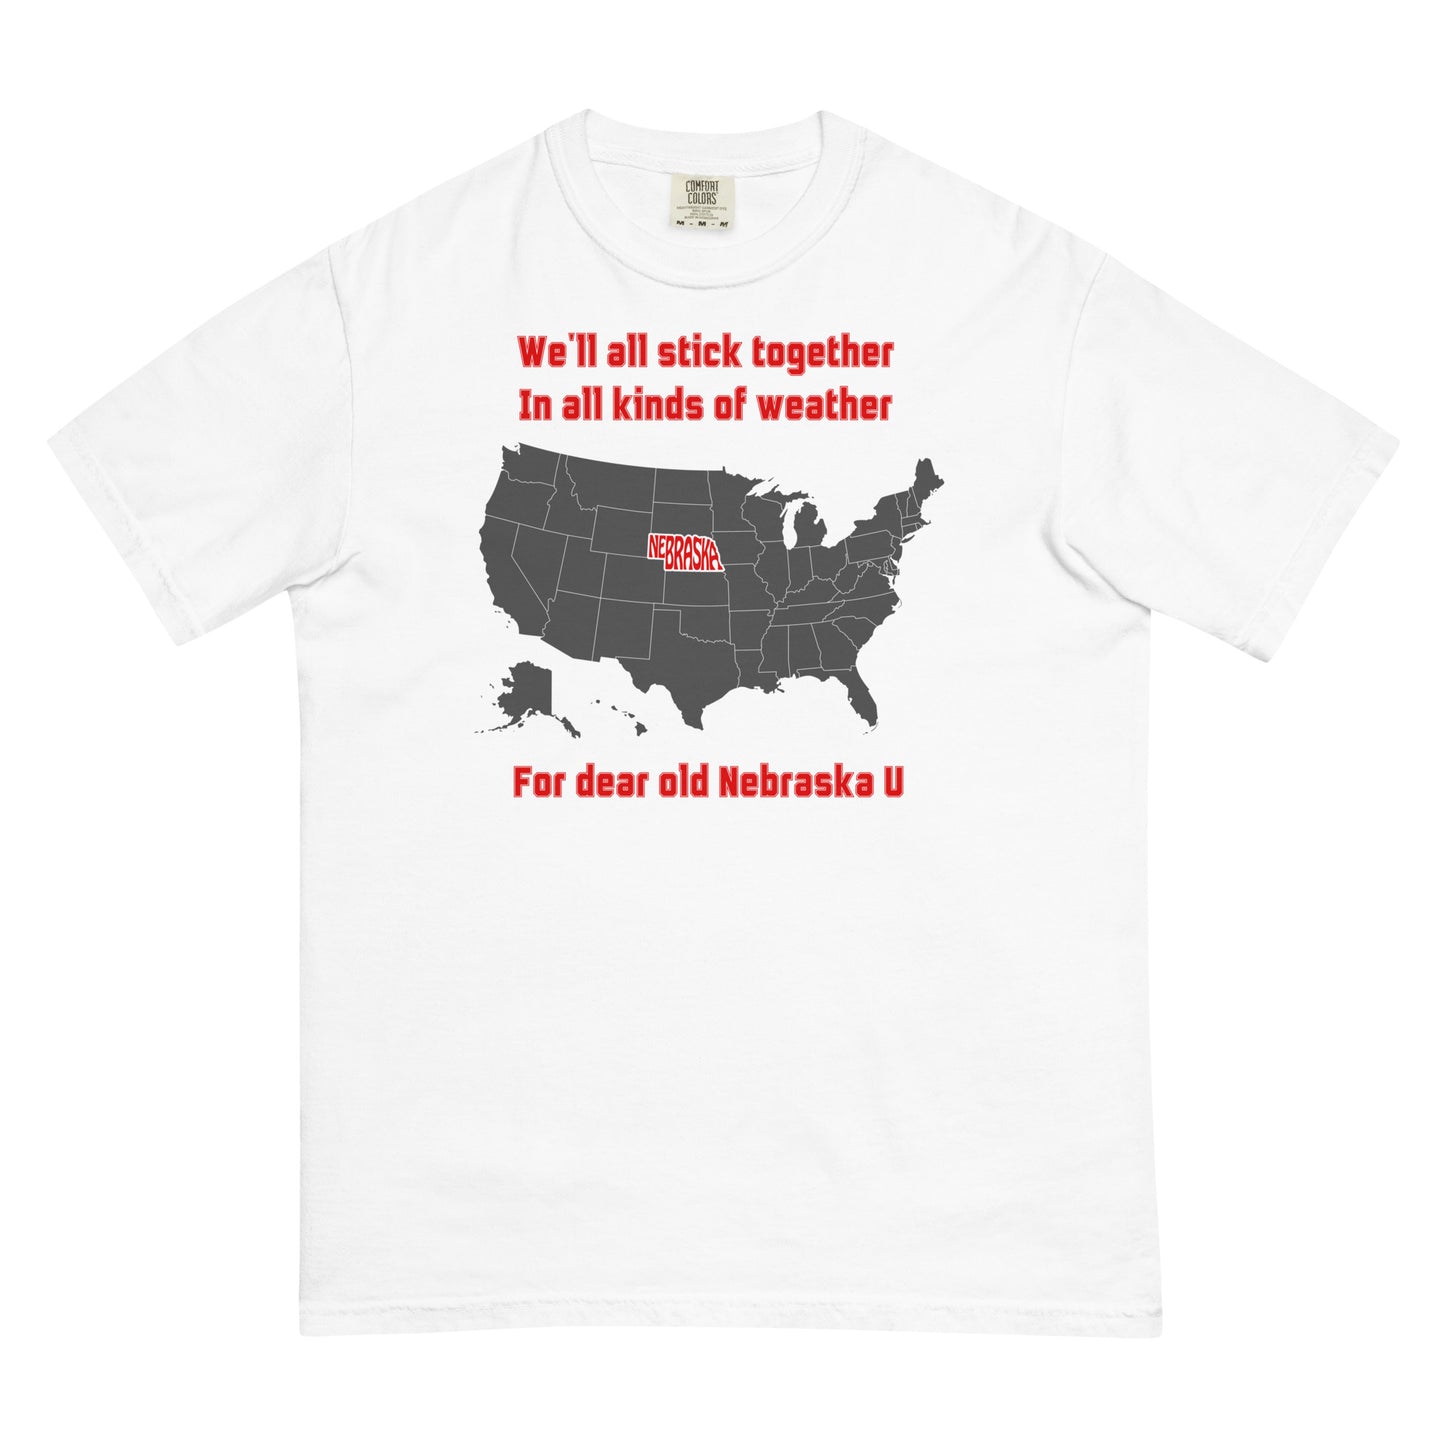 Dear Old Nebraska U T-shirt